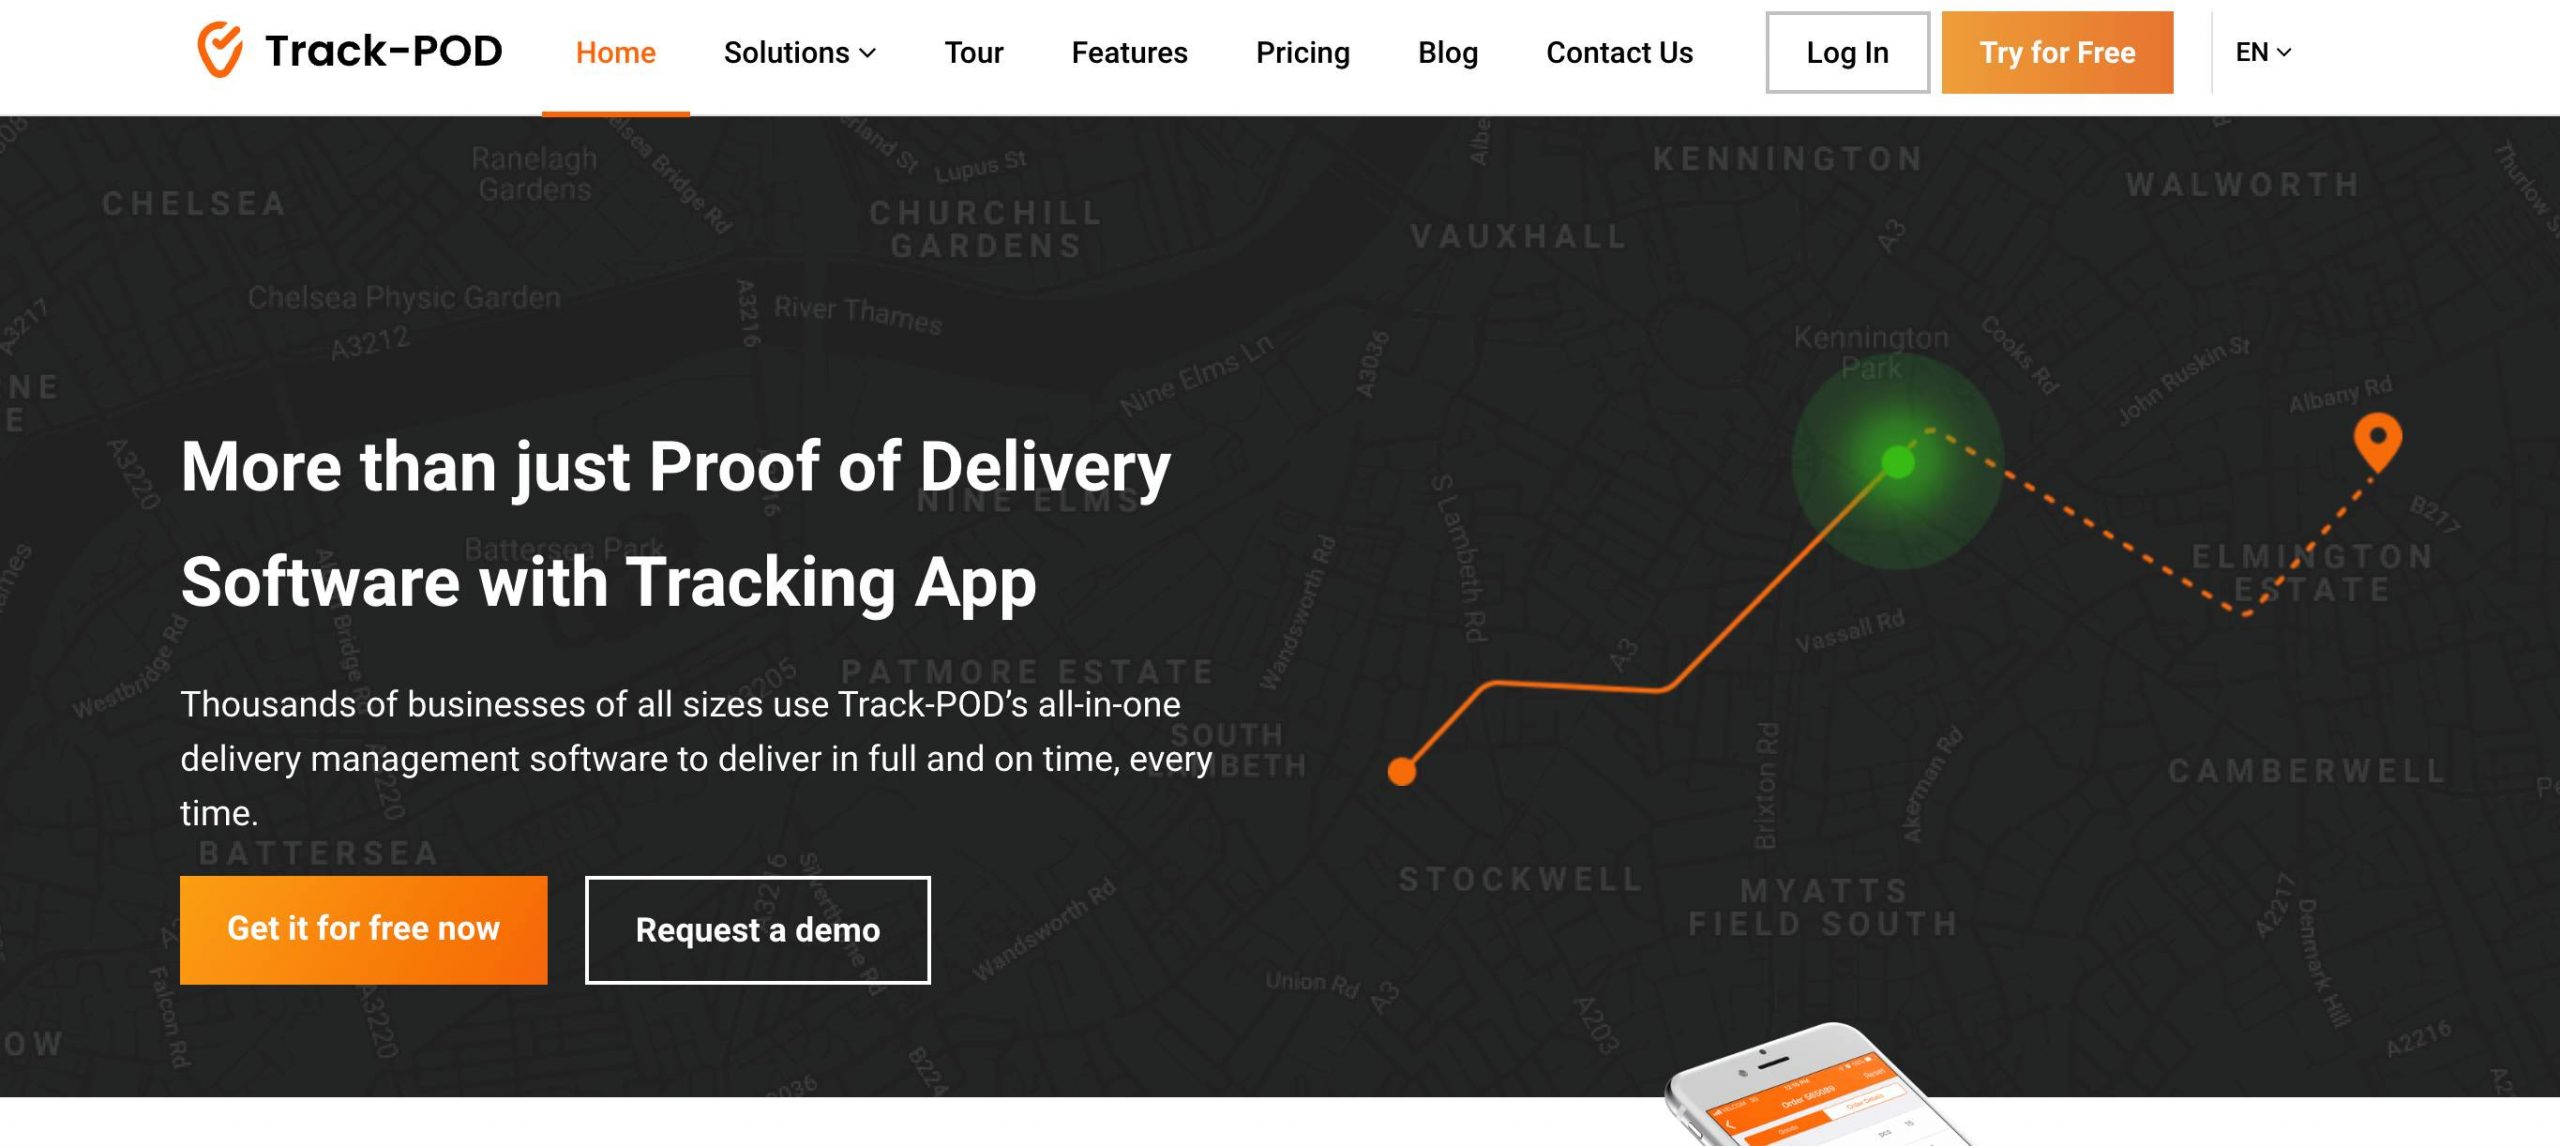 Track-POD Delivery Management Software